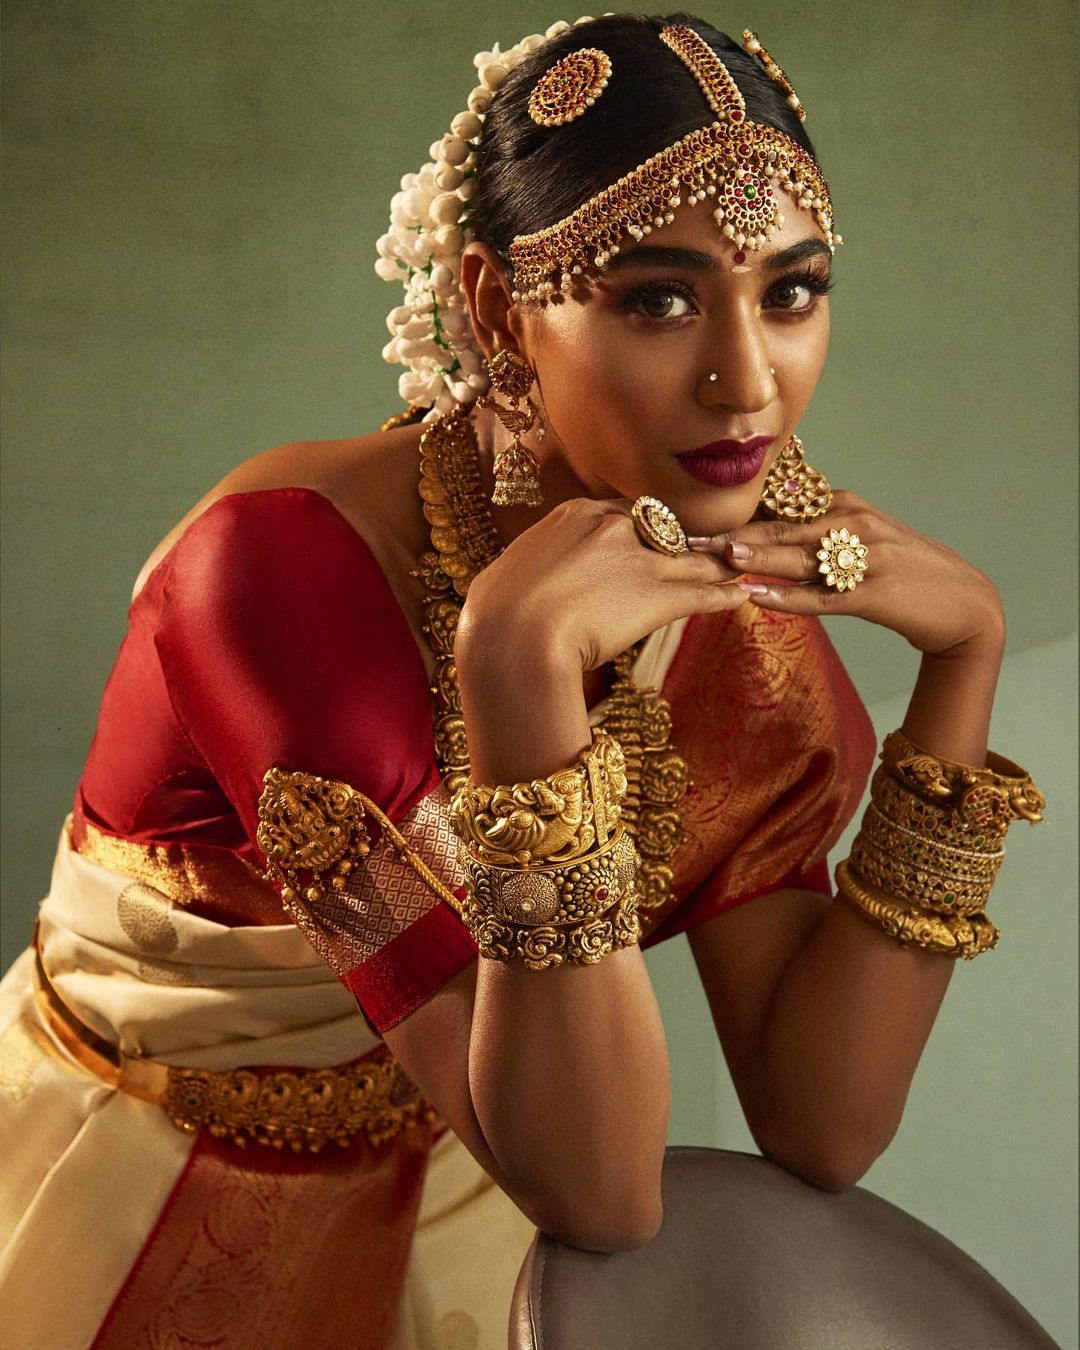 Tamil Weddings: Customs and Traditions | WeddingSutra